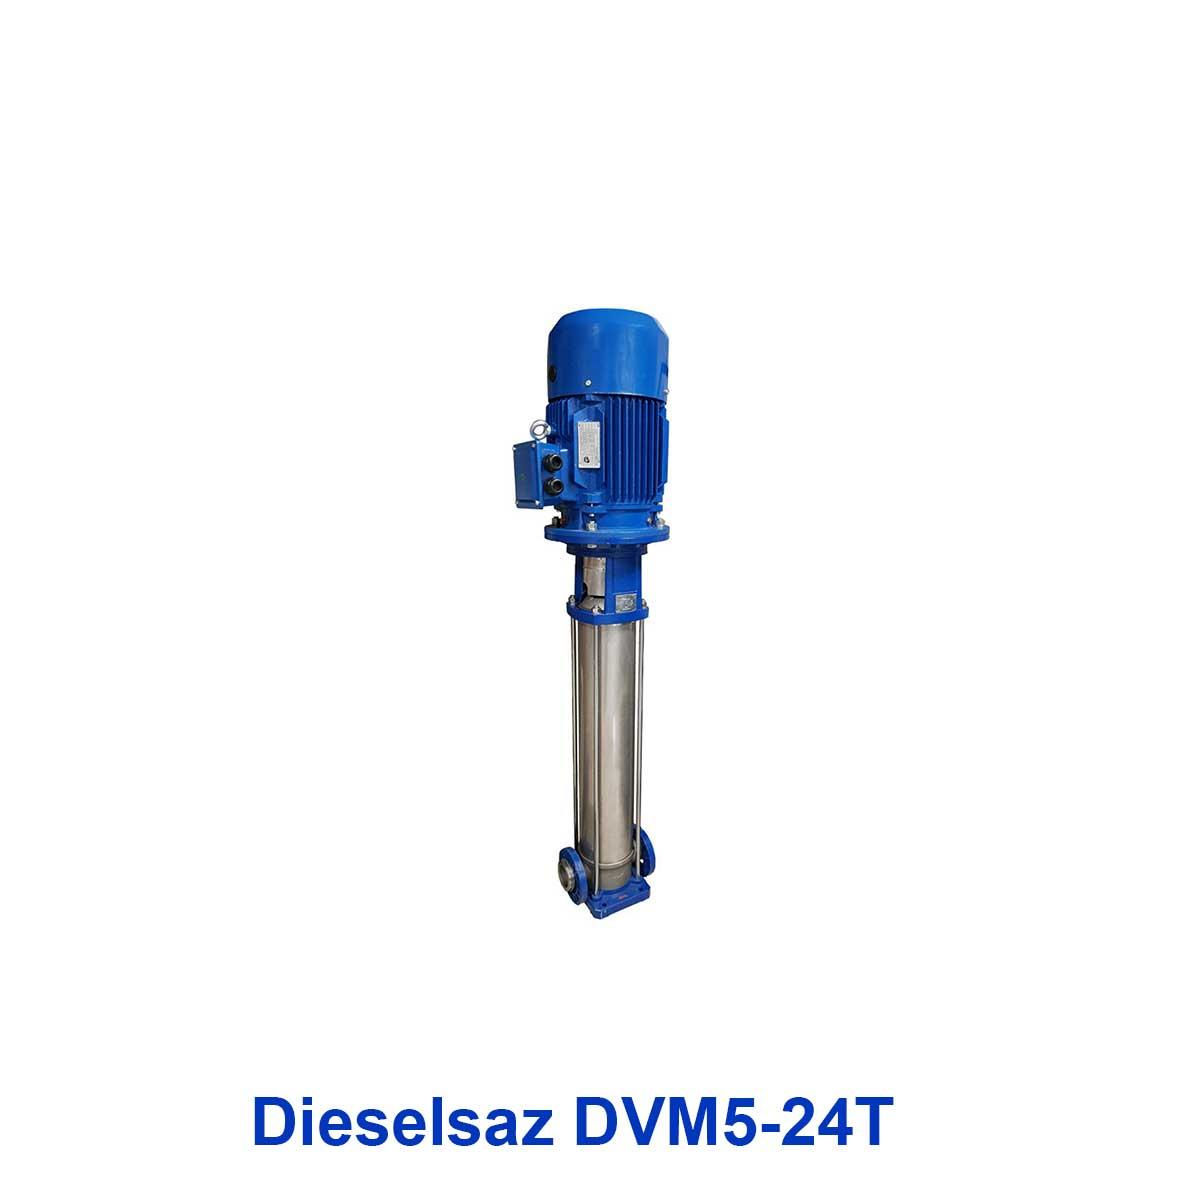 waterpump-vertical-Dieselsaz-DVM5-24T